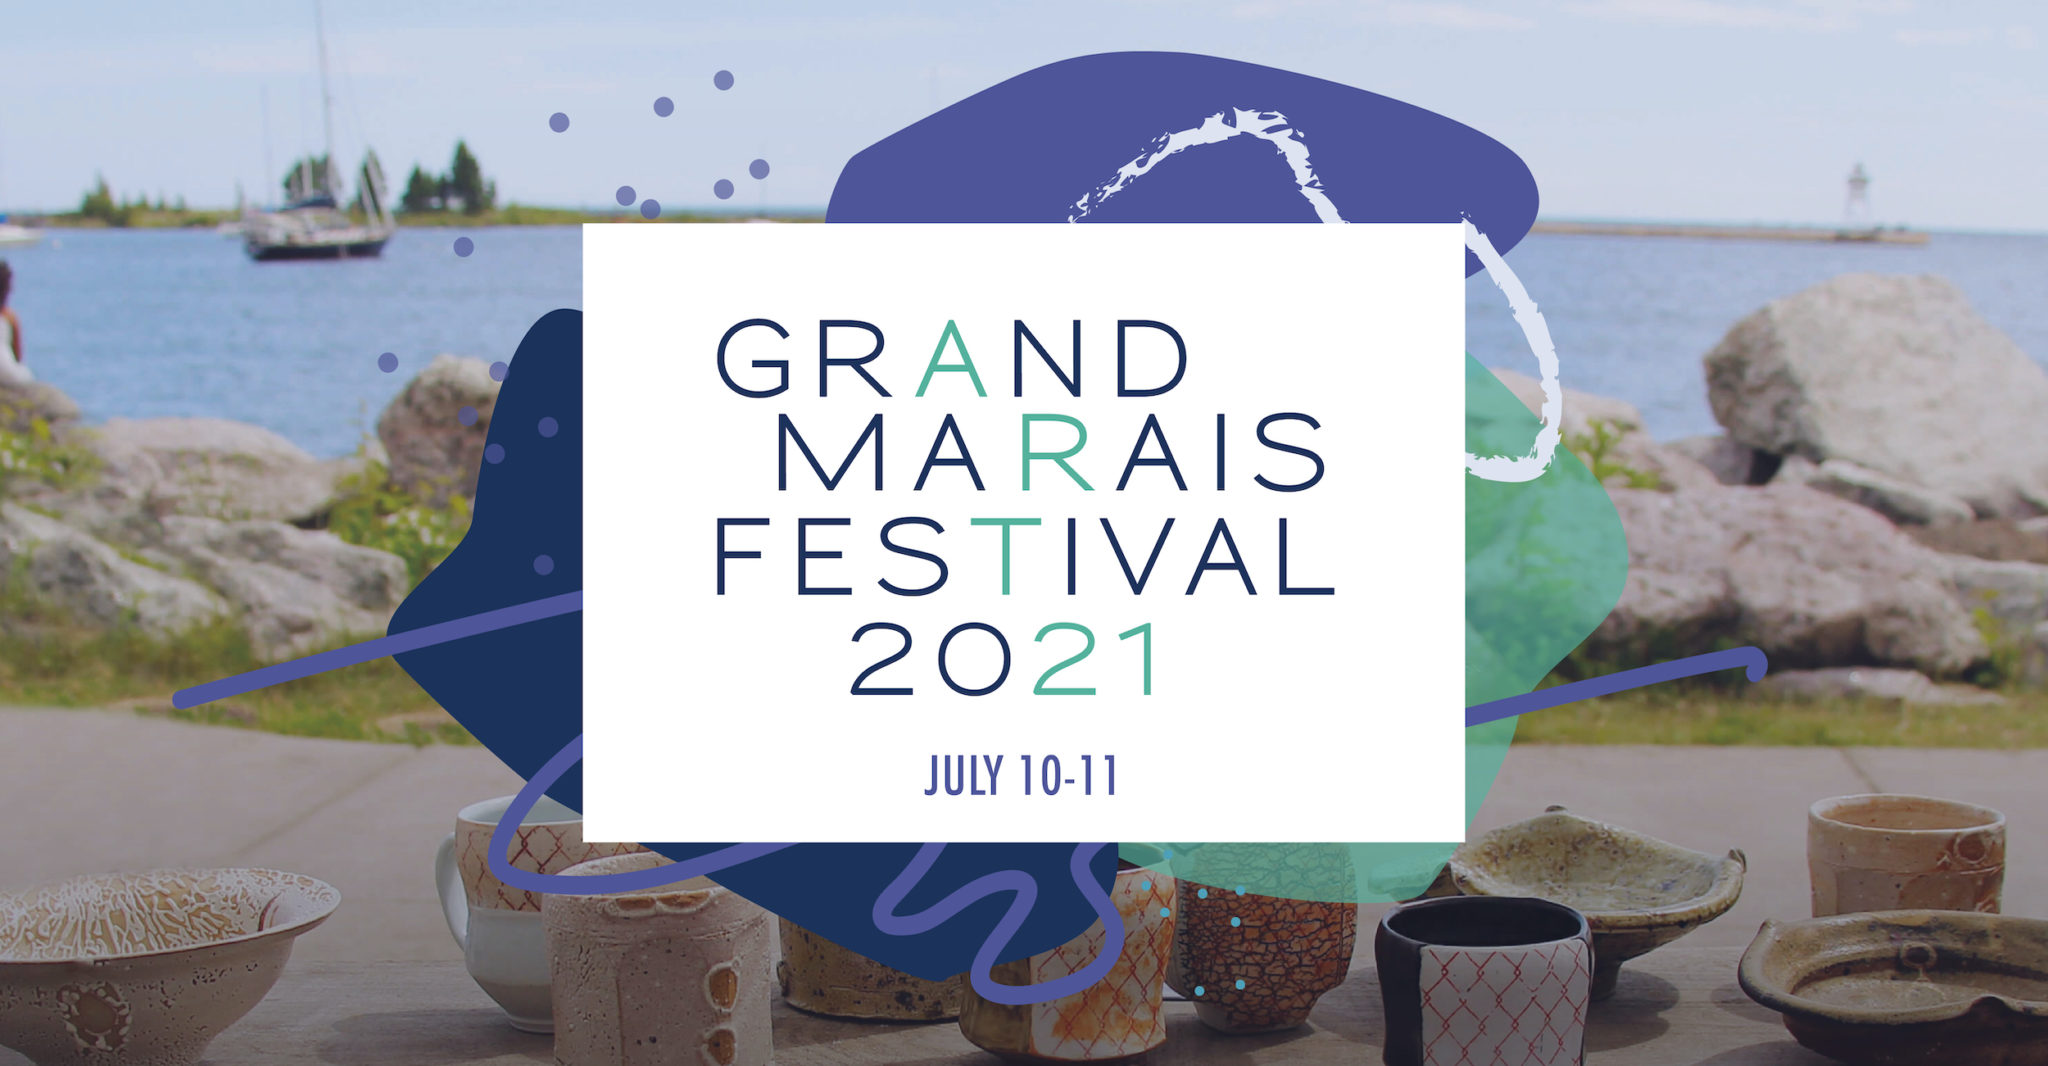 Grand Marais Art Colony 2021 Art Festival branding, created by Šek Design Studio